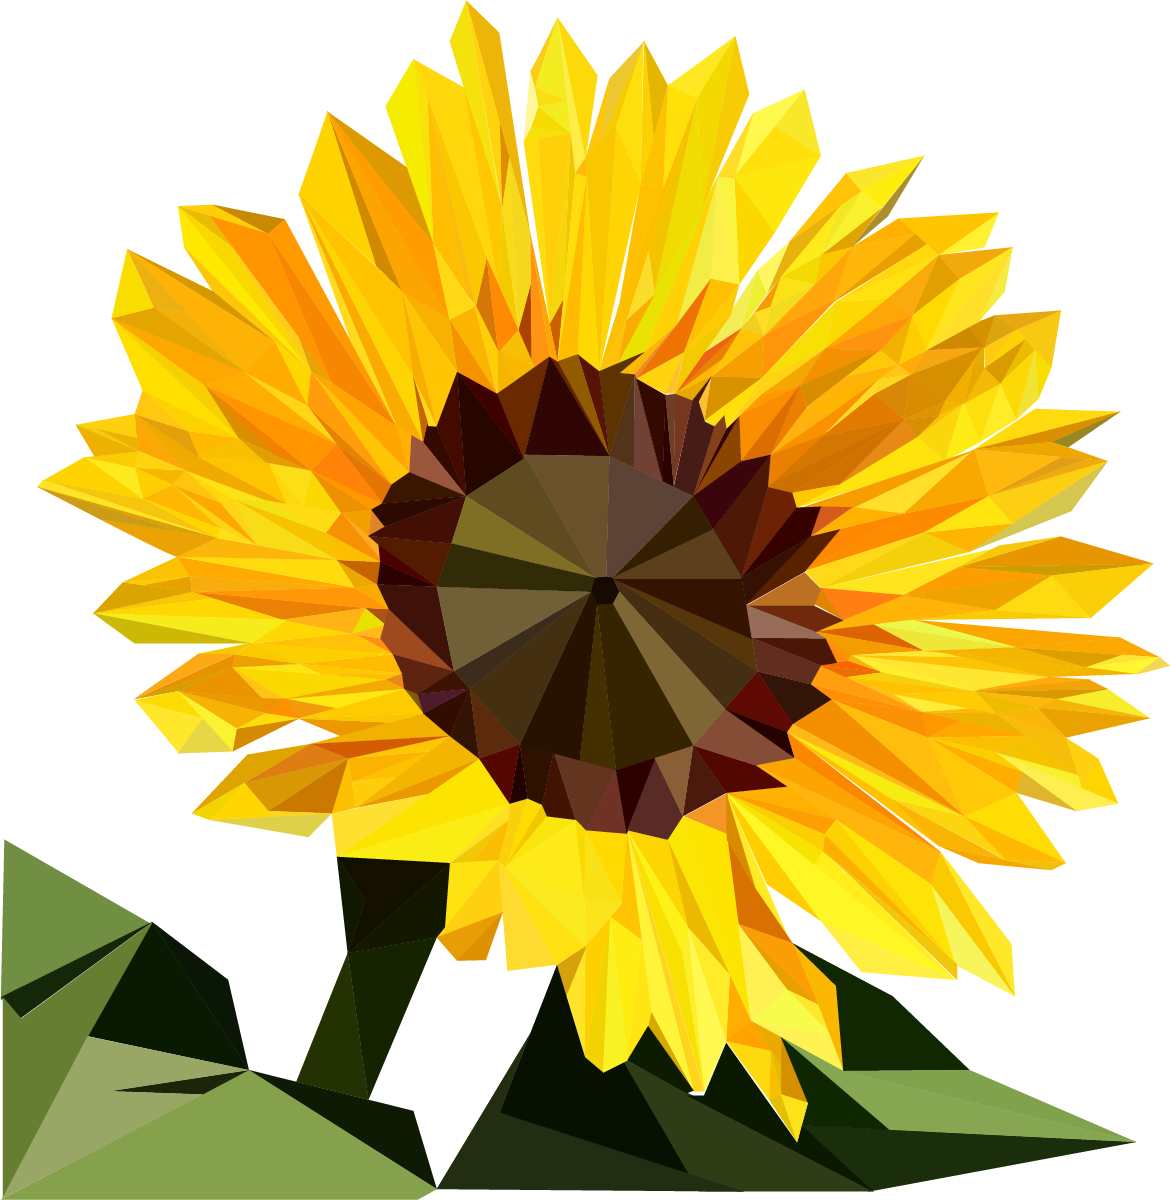 a crystallized sunflower.